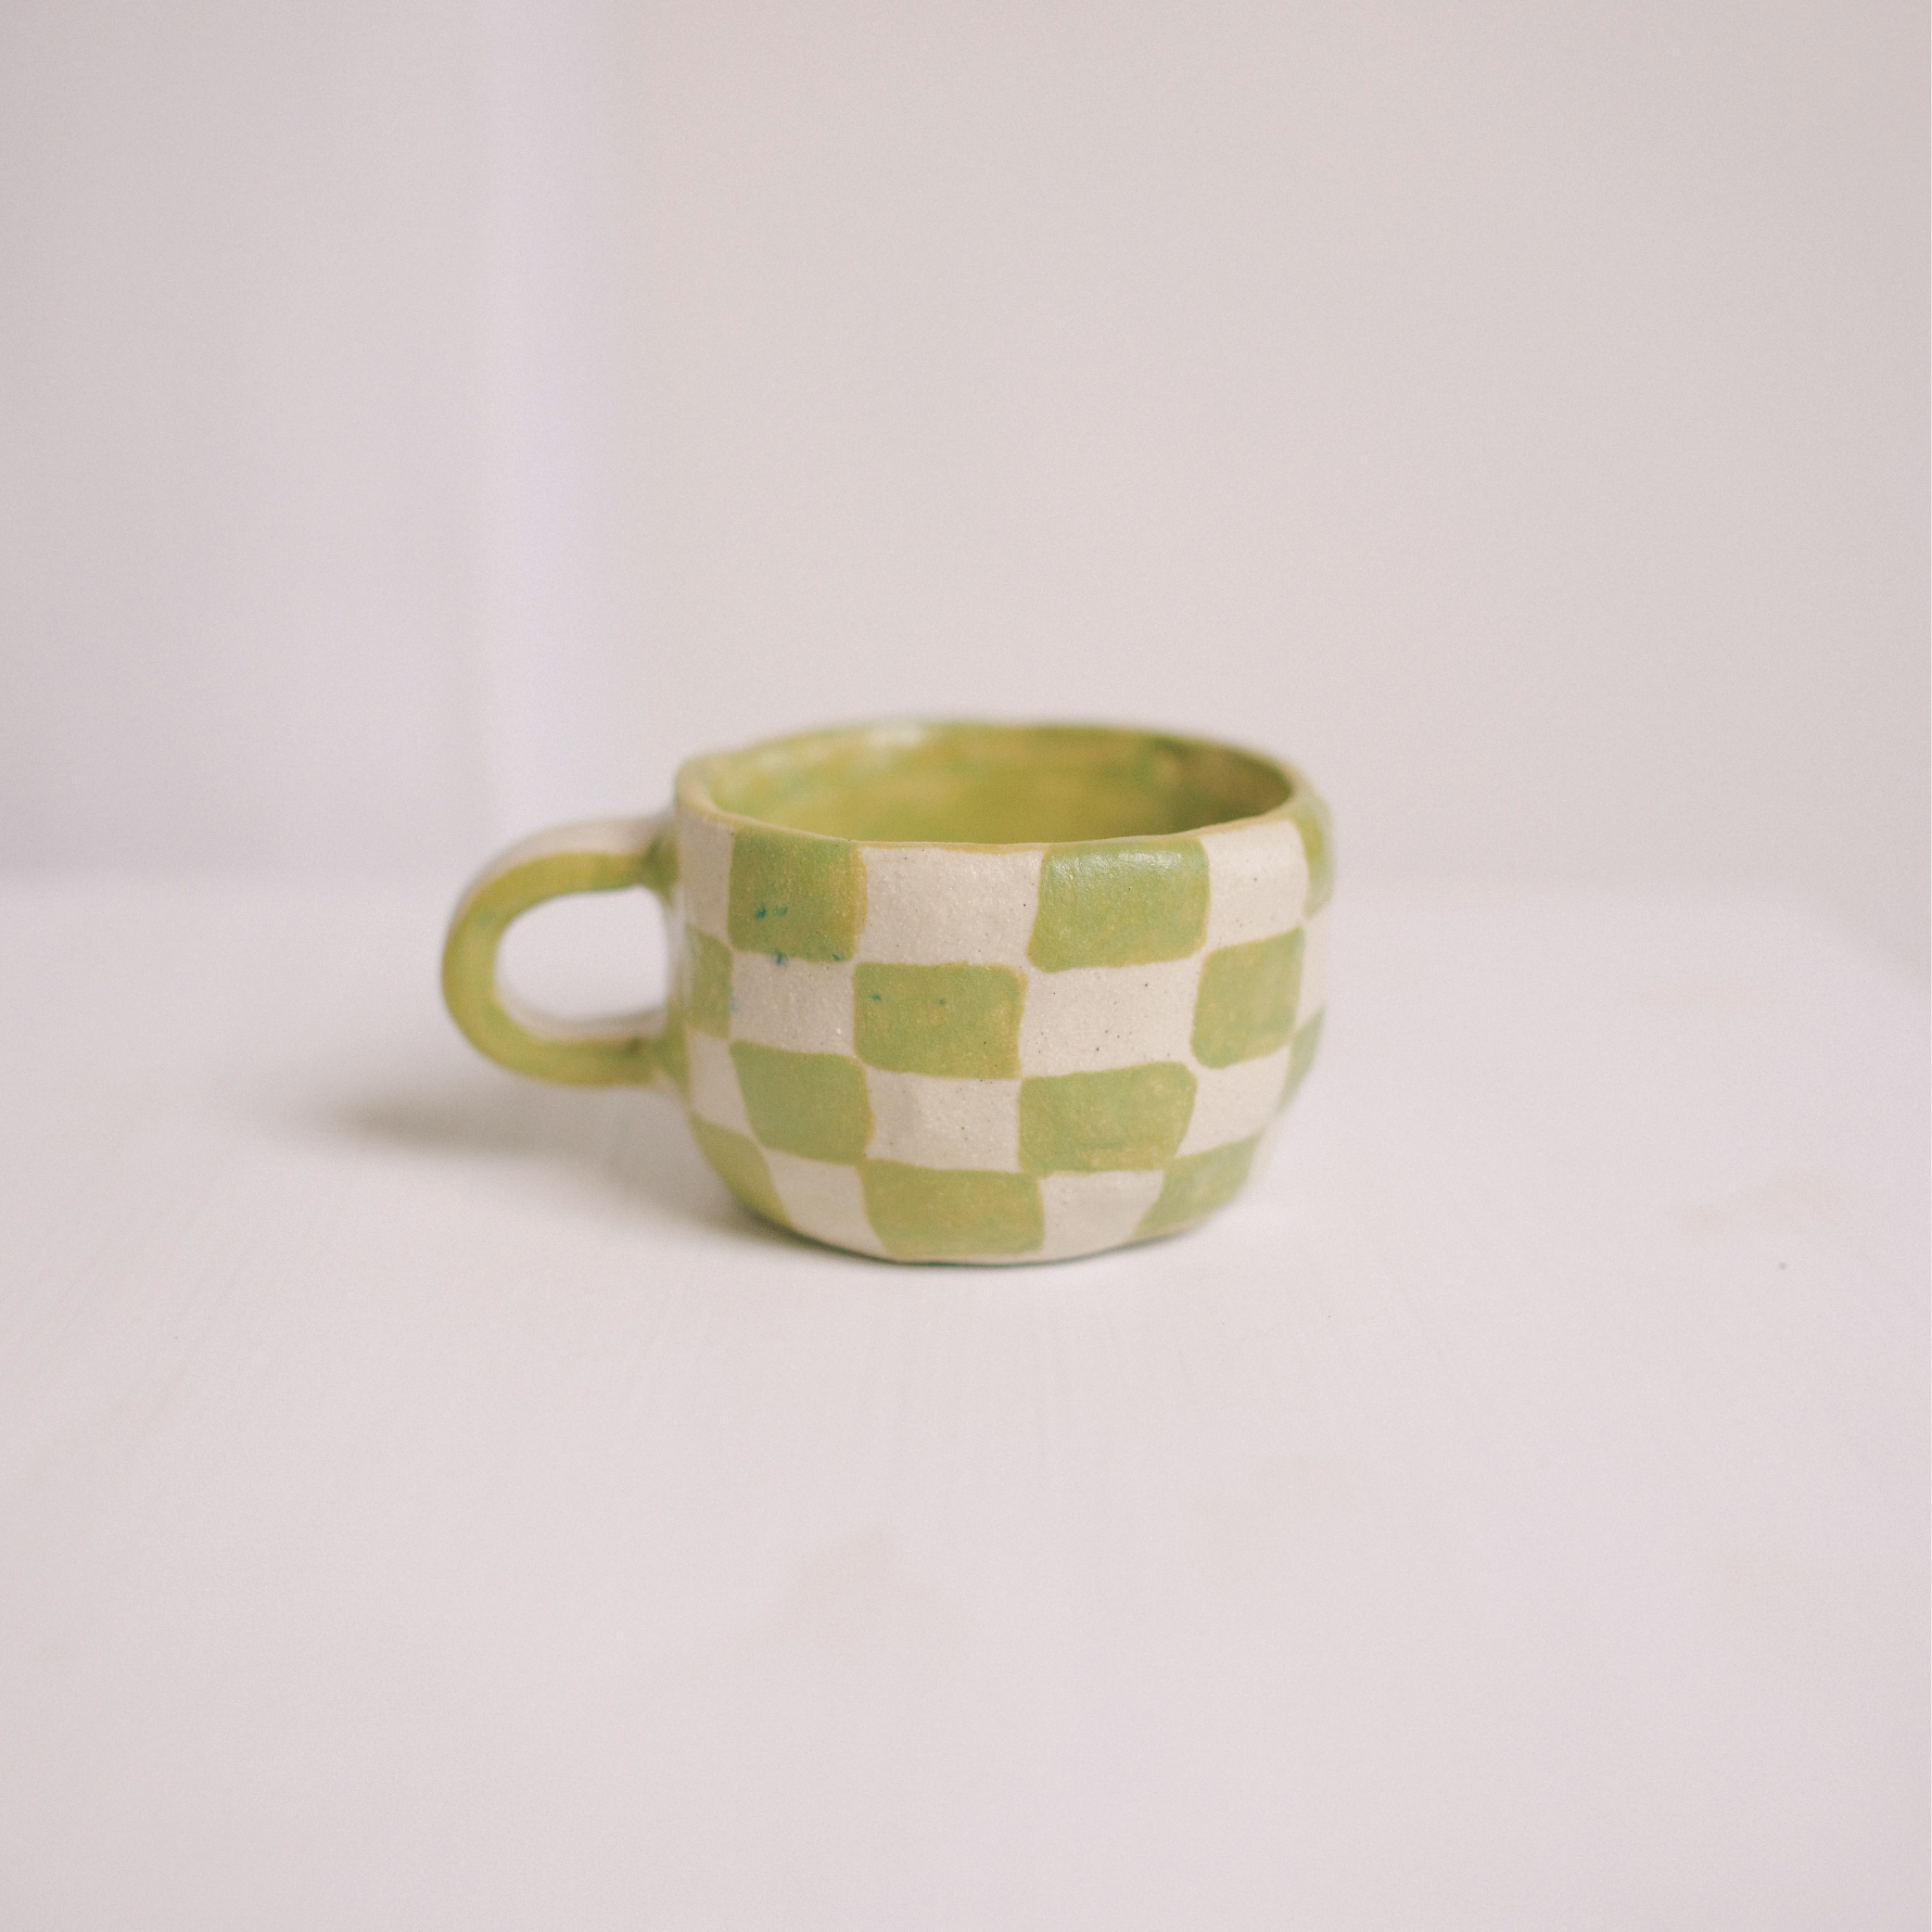 The Checkmate Mug in Matcha